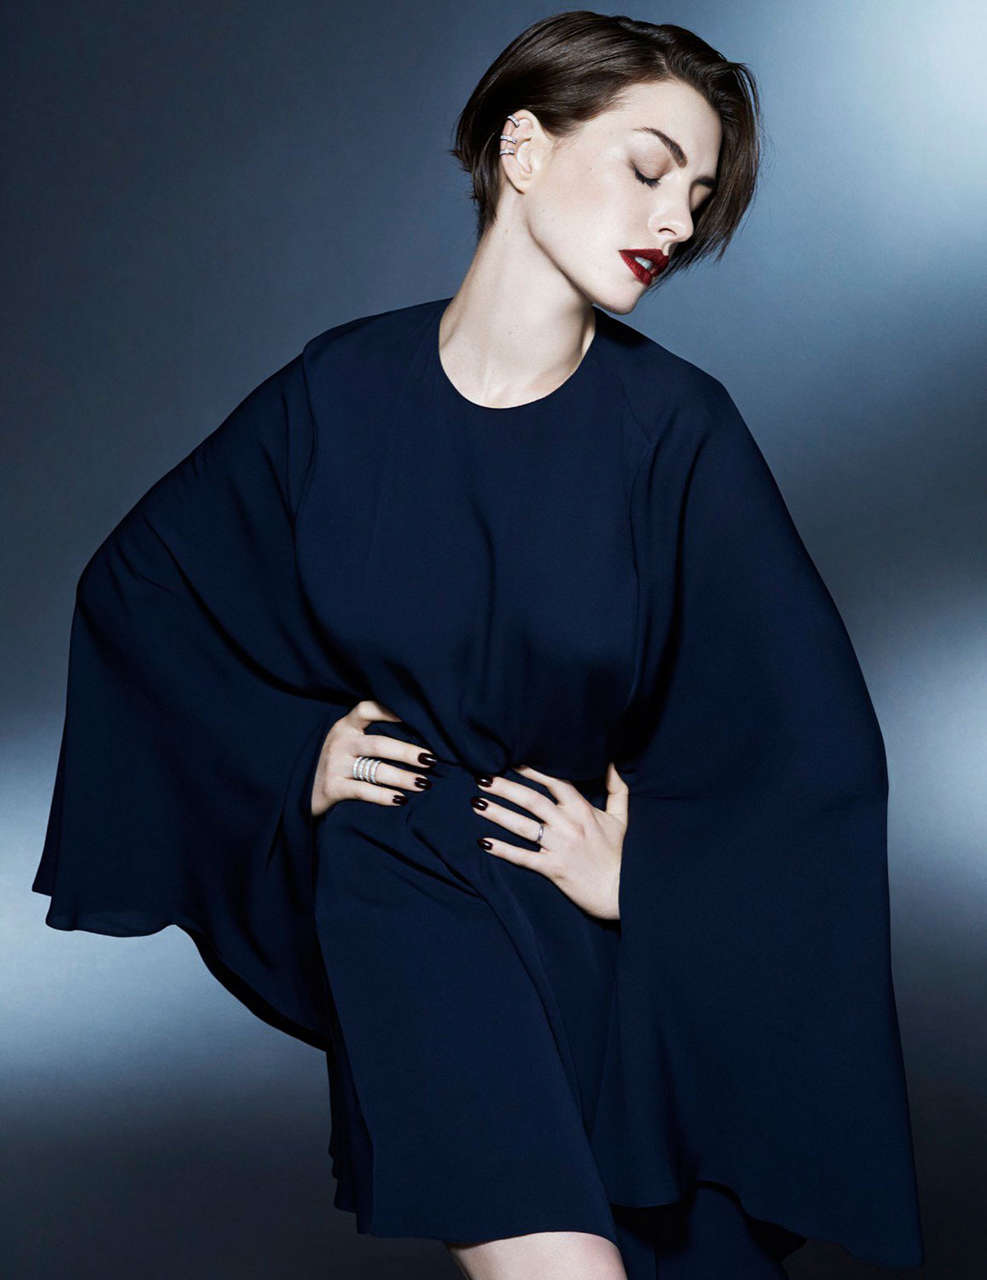 Anne Hathaway Elle Magazine November Uk 2014 Issue